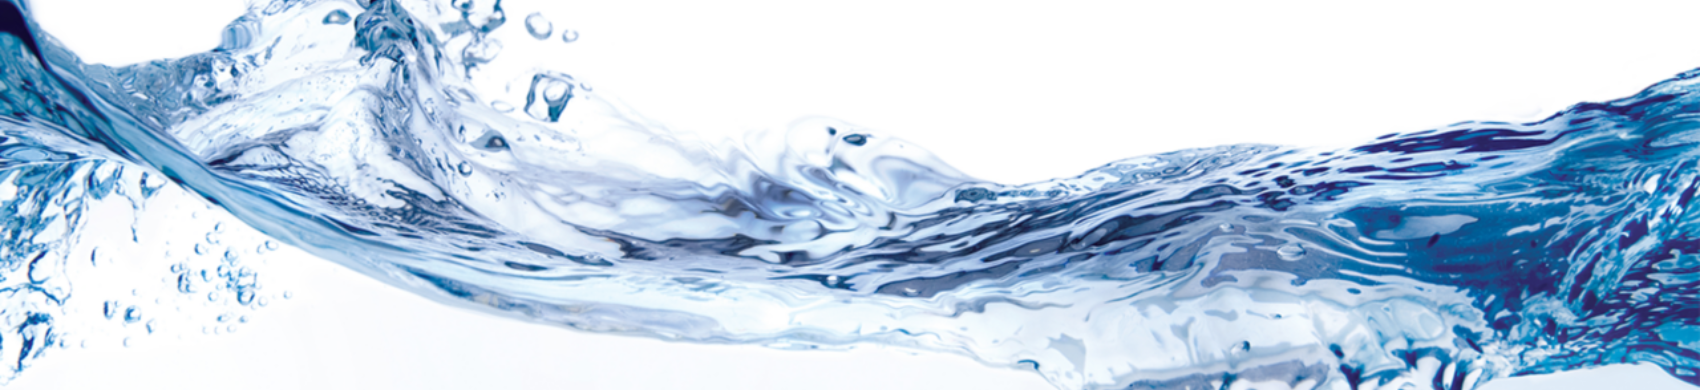 Flushing/Sanitizing Water Filtration Solutions - Vita Filters